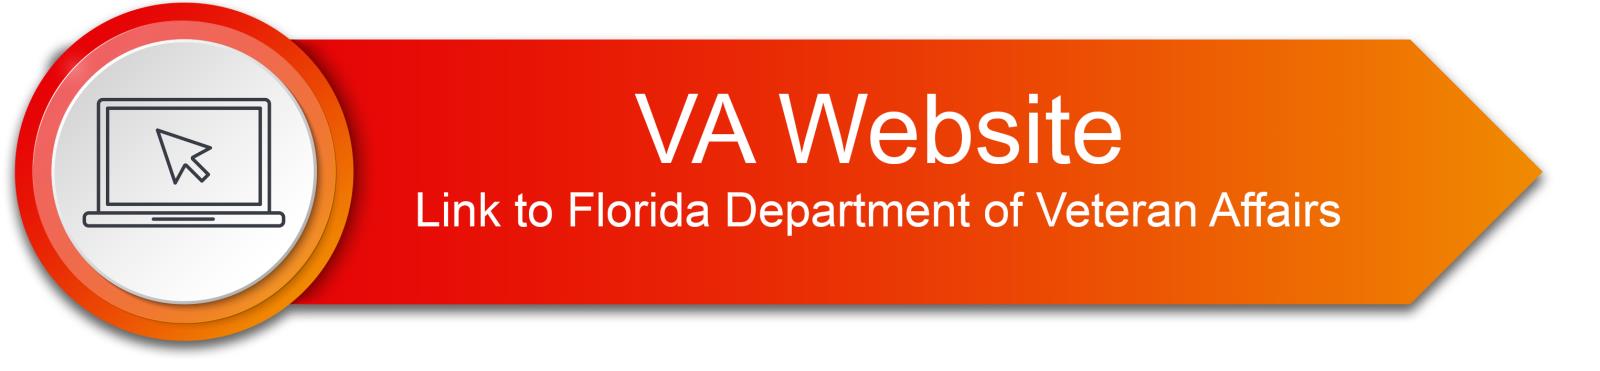 Link to Florida Department of Veteran Affairs